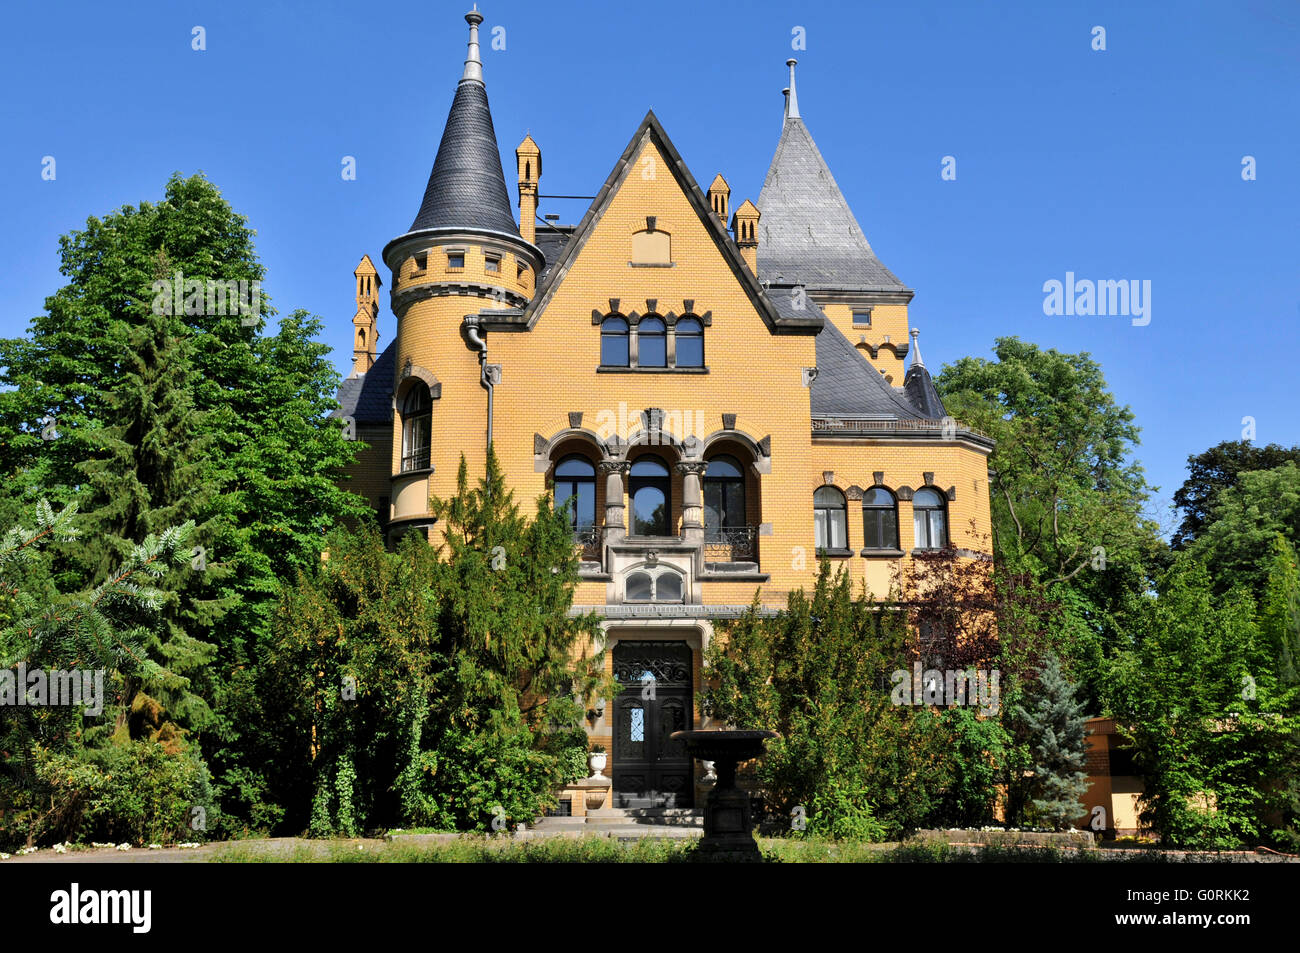 Villa Herz, am Grossen Wannsee, Berlin, Germania / Villa cuore Foto Stock